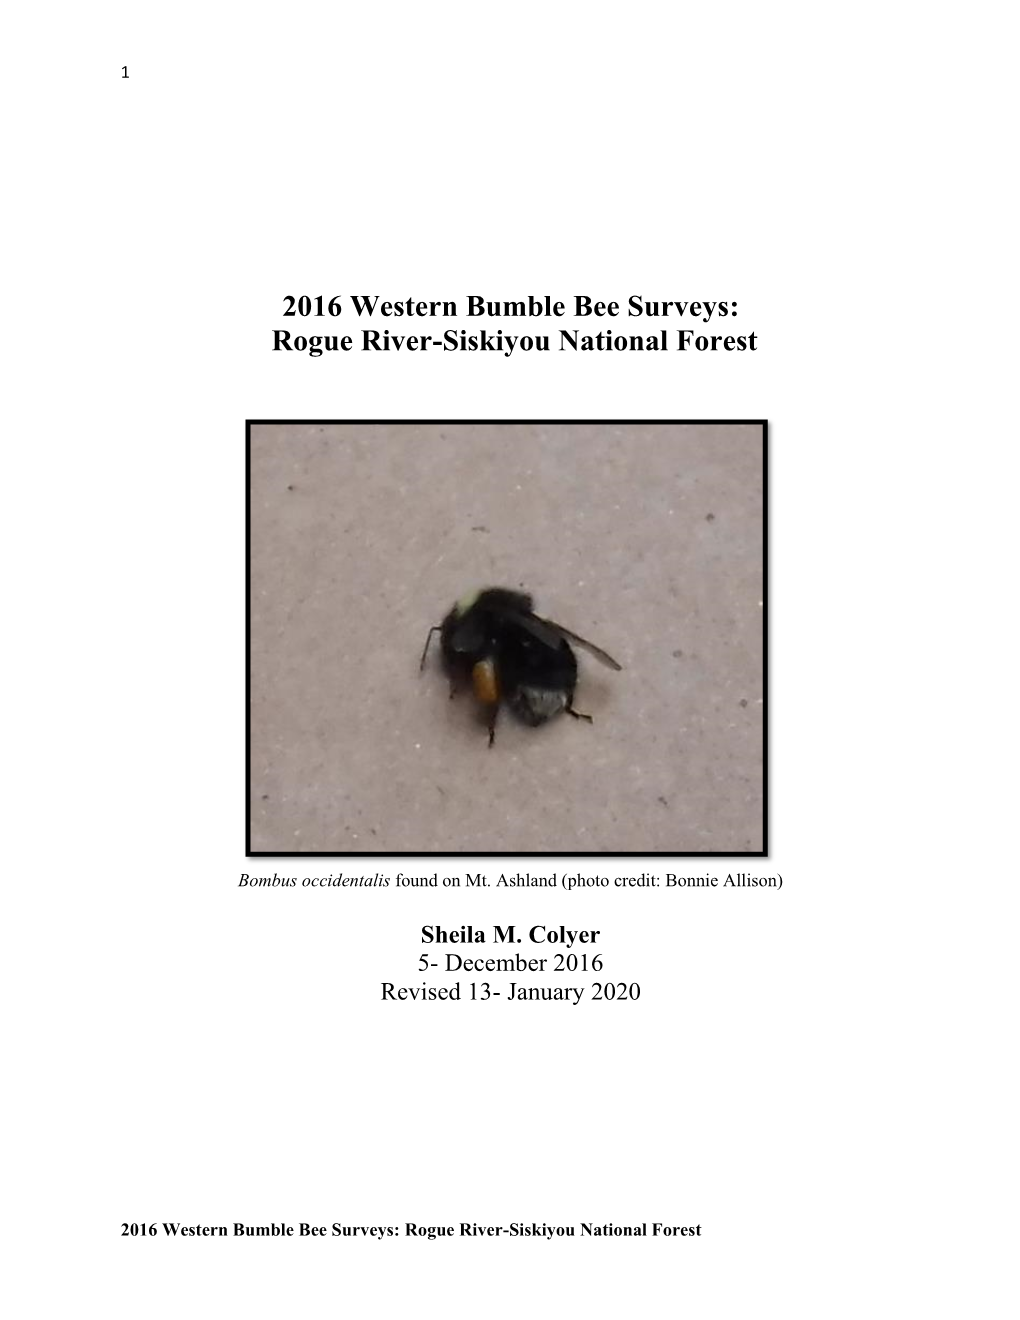 Western Bumble Bee Surveys, Rogue River-Siskiyou NF